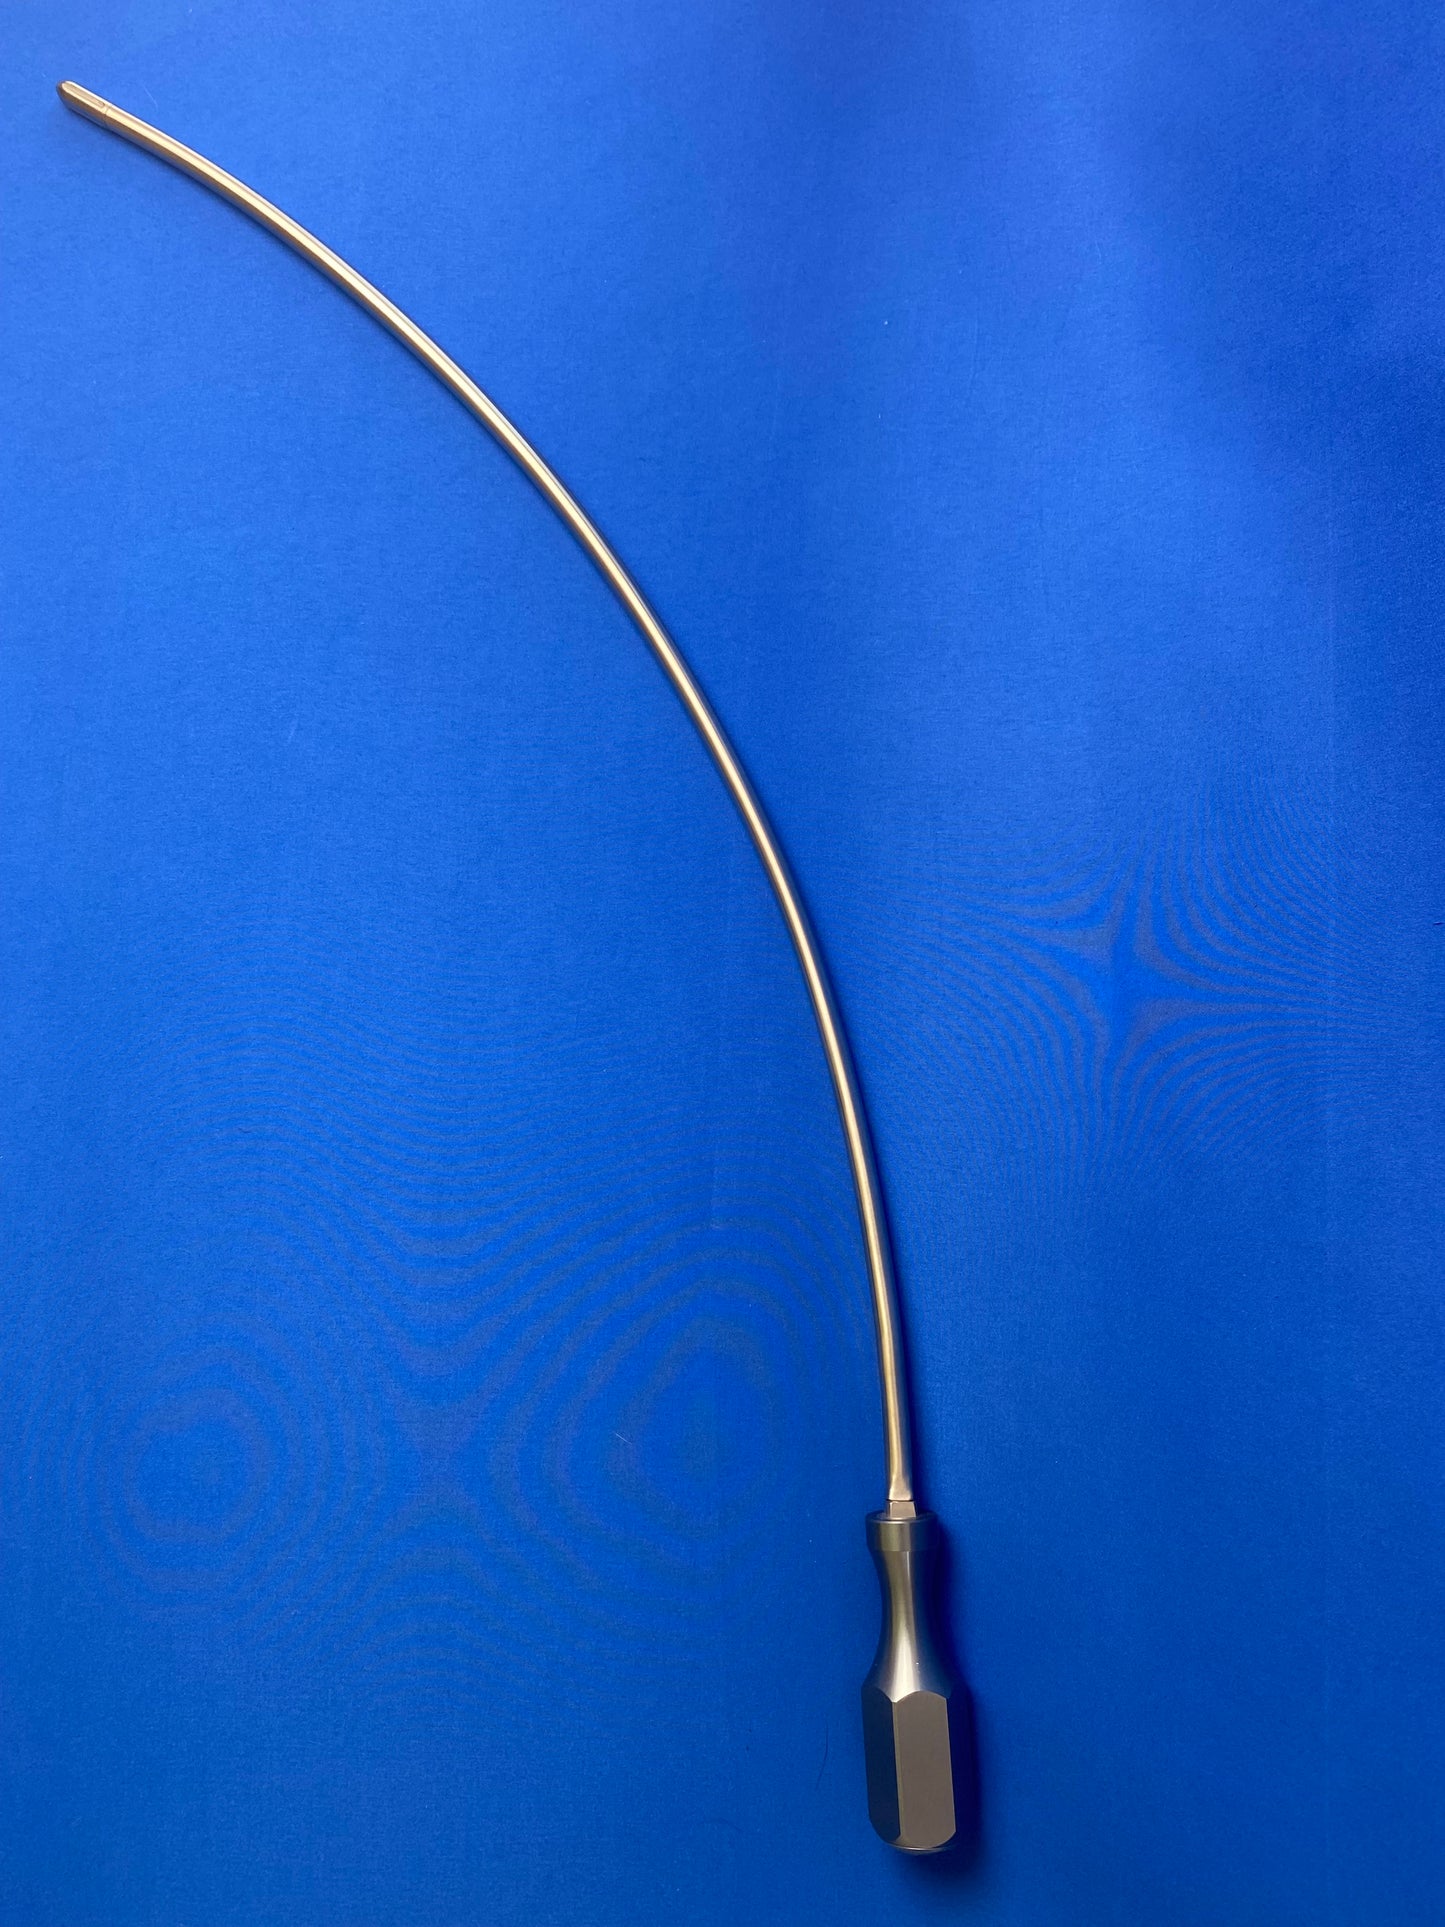 6mm x 65cm Slight Curve Vascular Tunneler